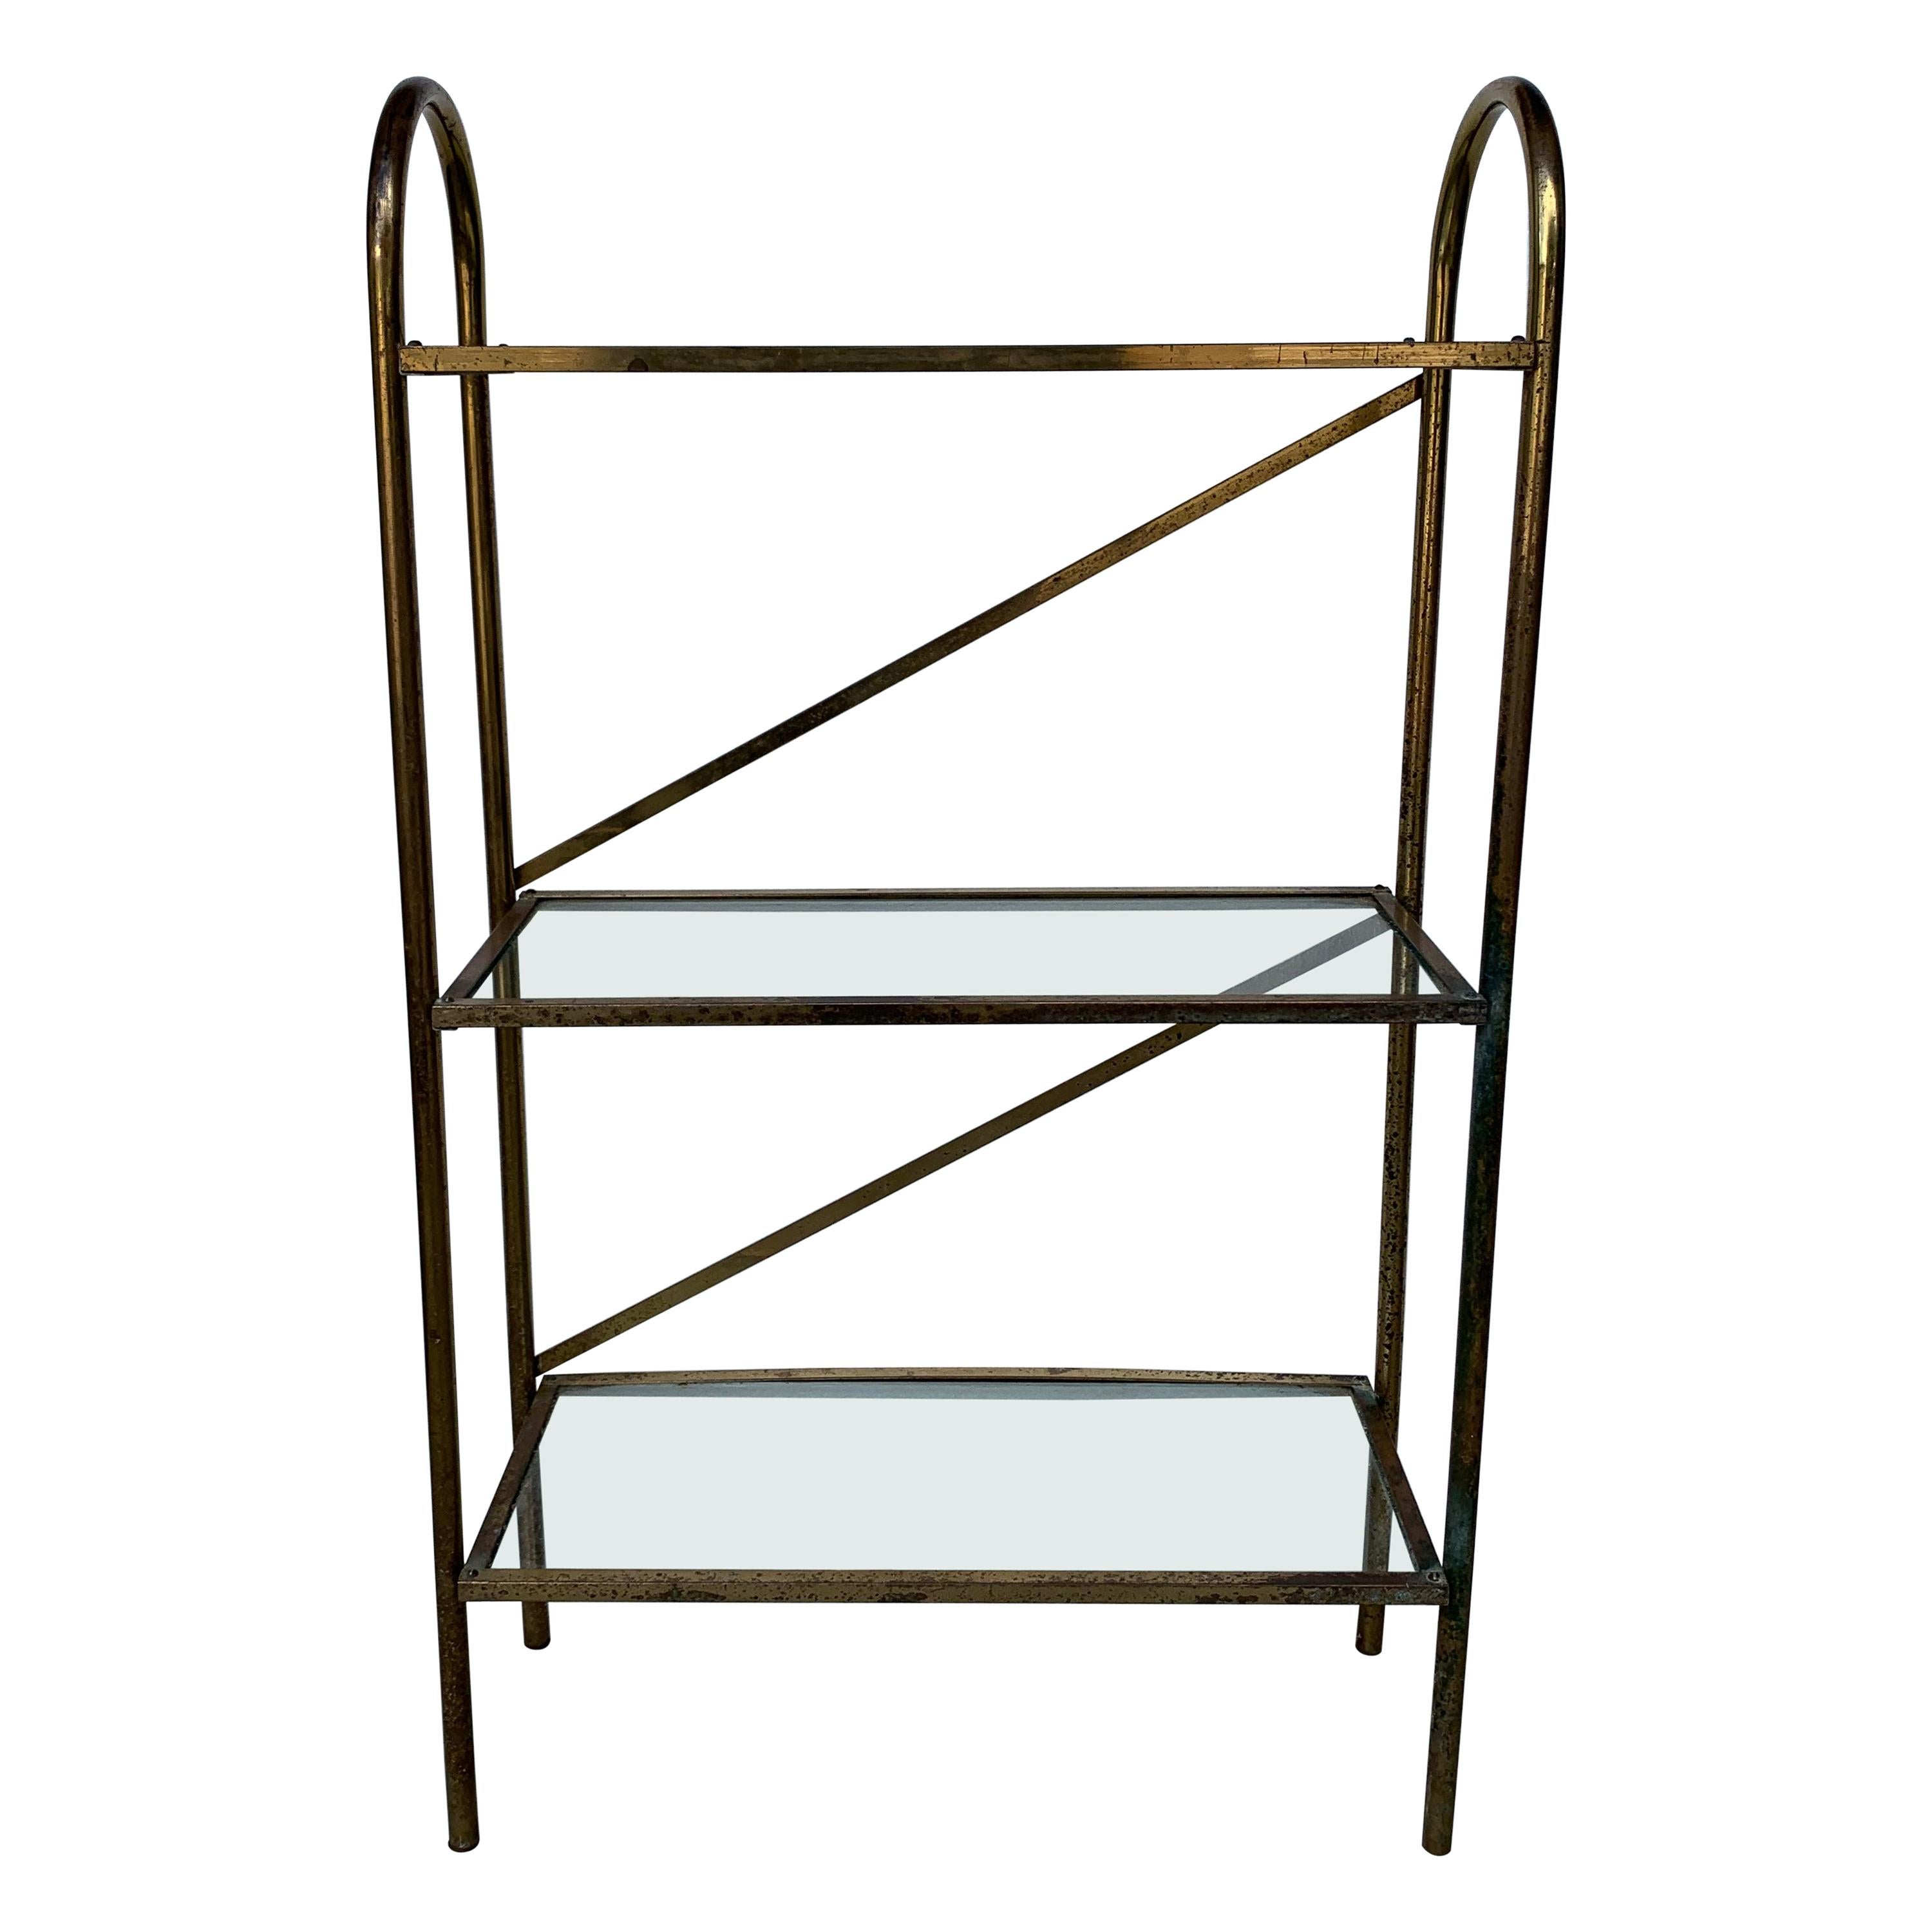 Small vintage narrow Mid-Century Modern brass and glass shelves bathroom rack shelf.